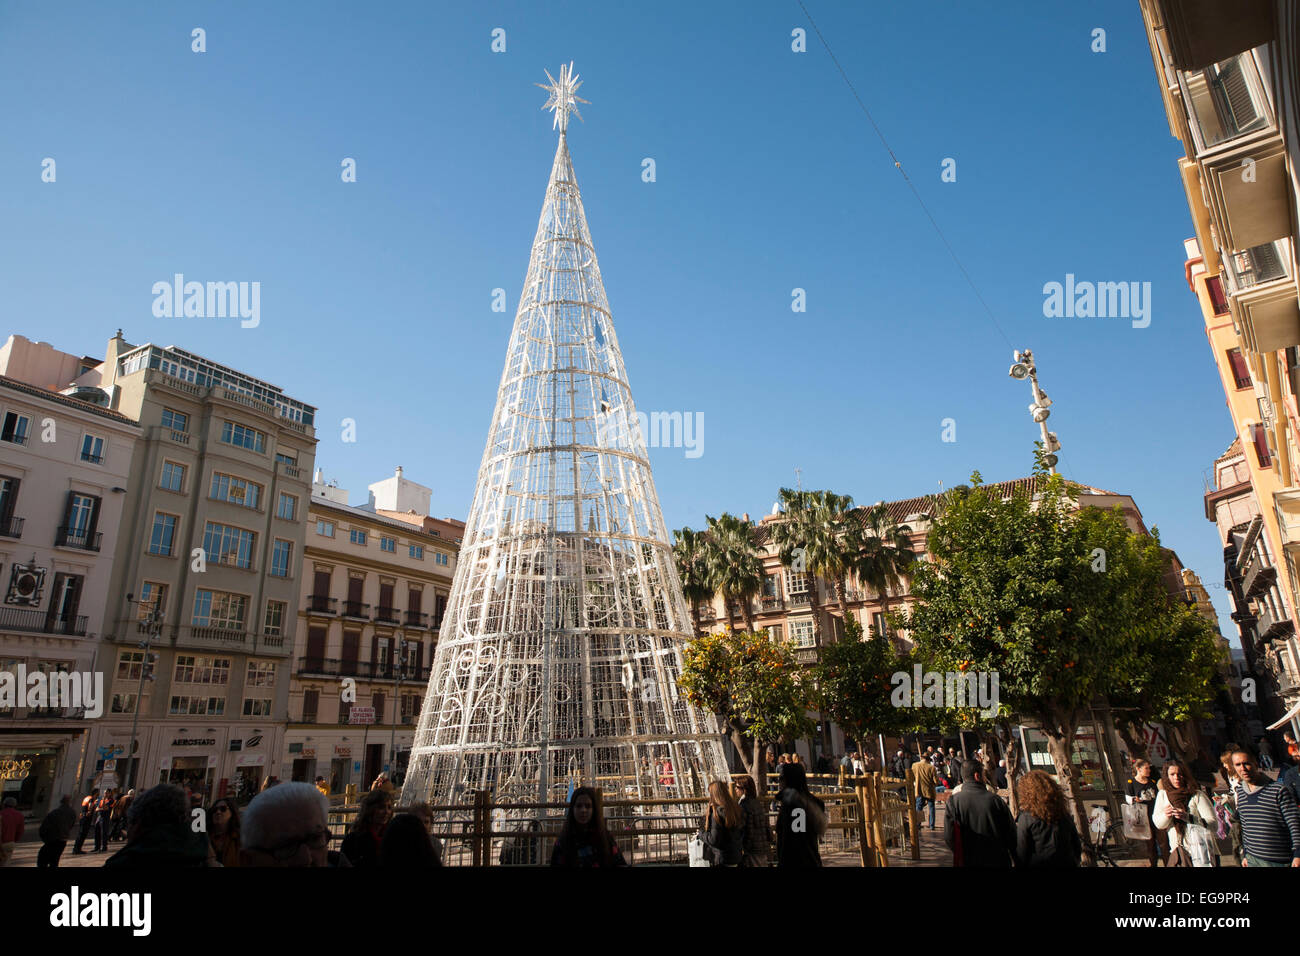 Christmas tree decorations in Plaza de Constitucion, Malaga, Spain Stock Photo